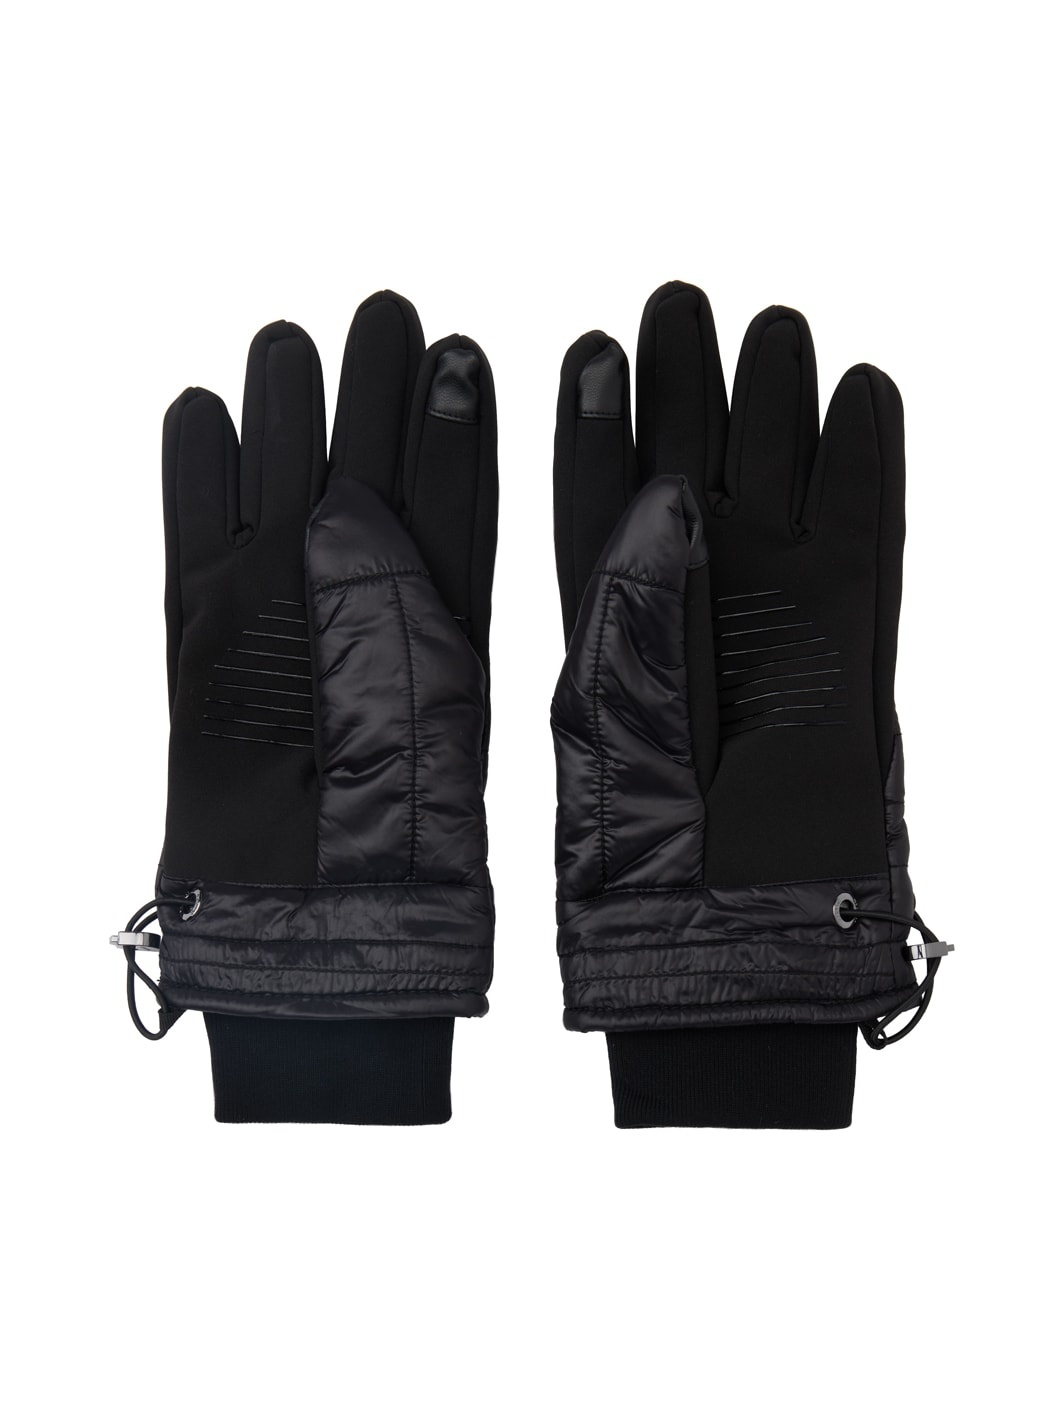 Black Alfie Re-Stop Gloves - 2